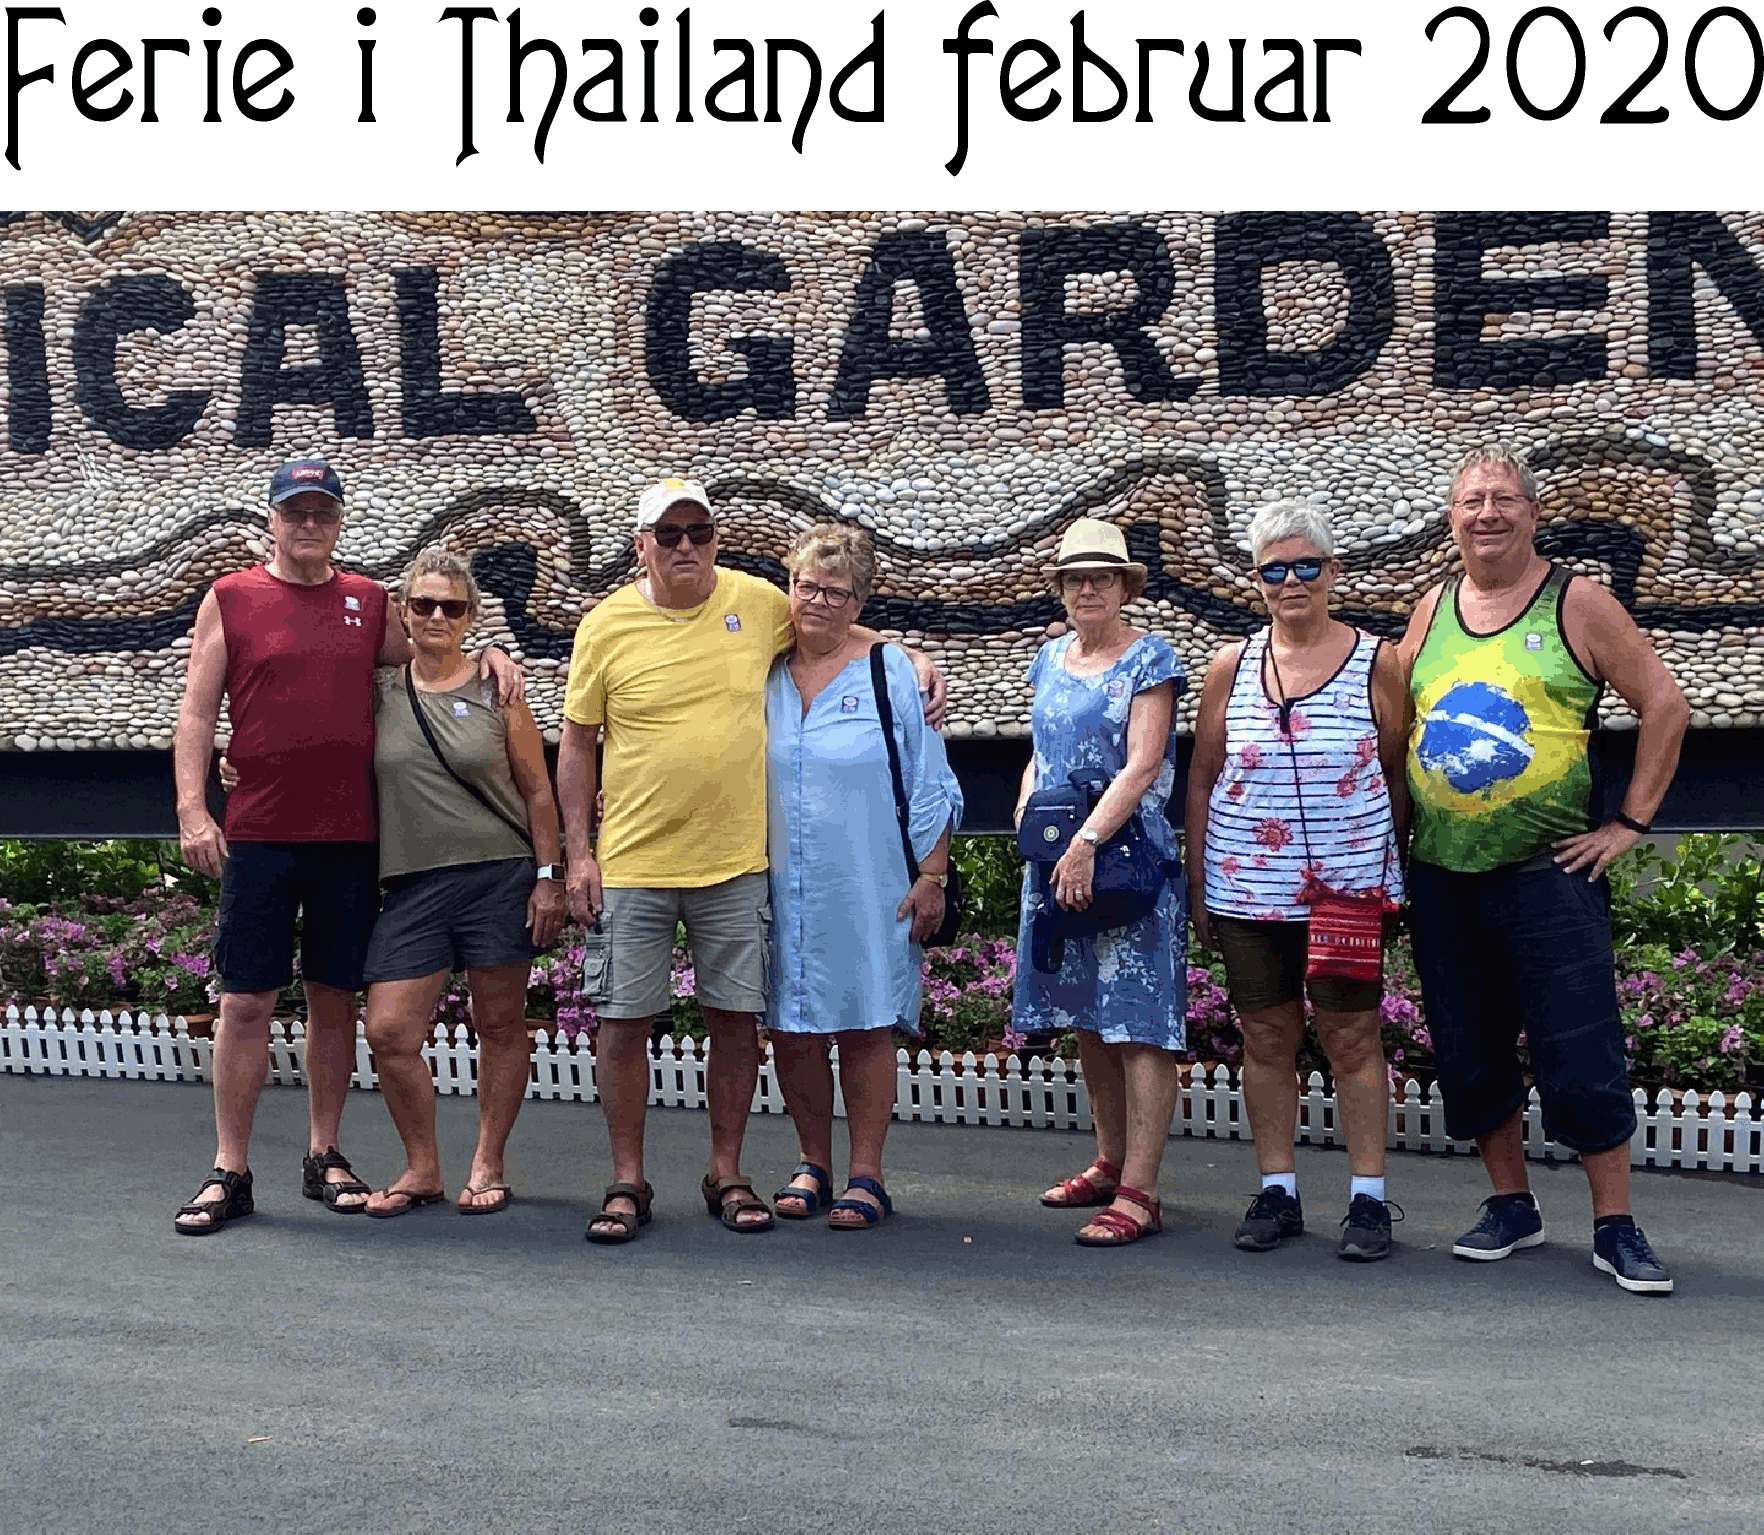 Ferie i Thailand februar 2020